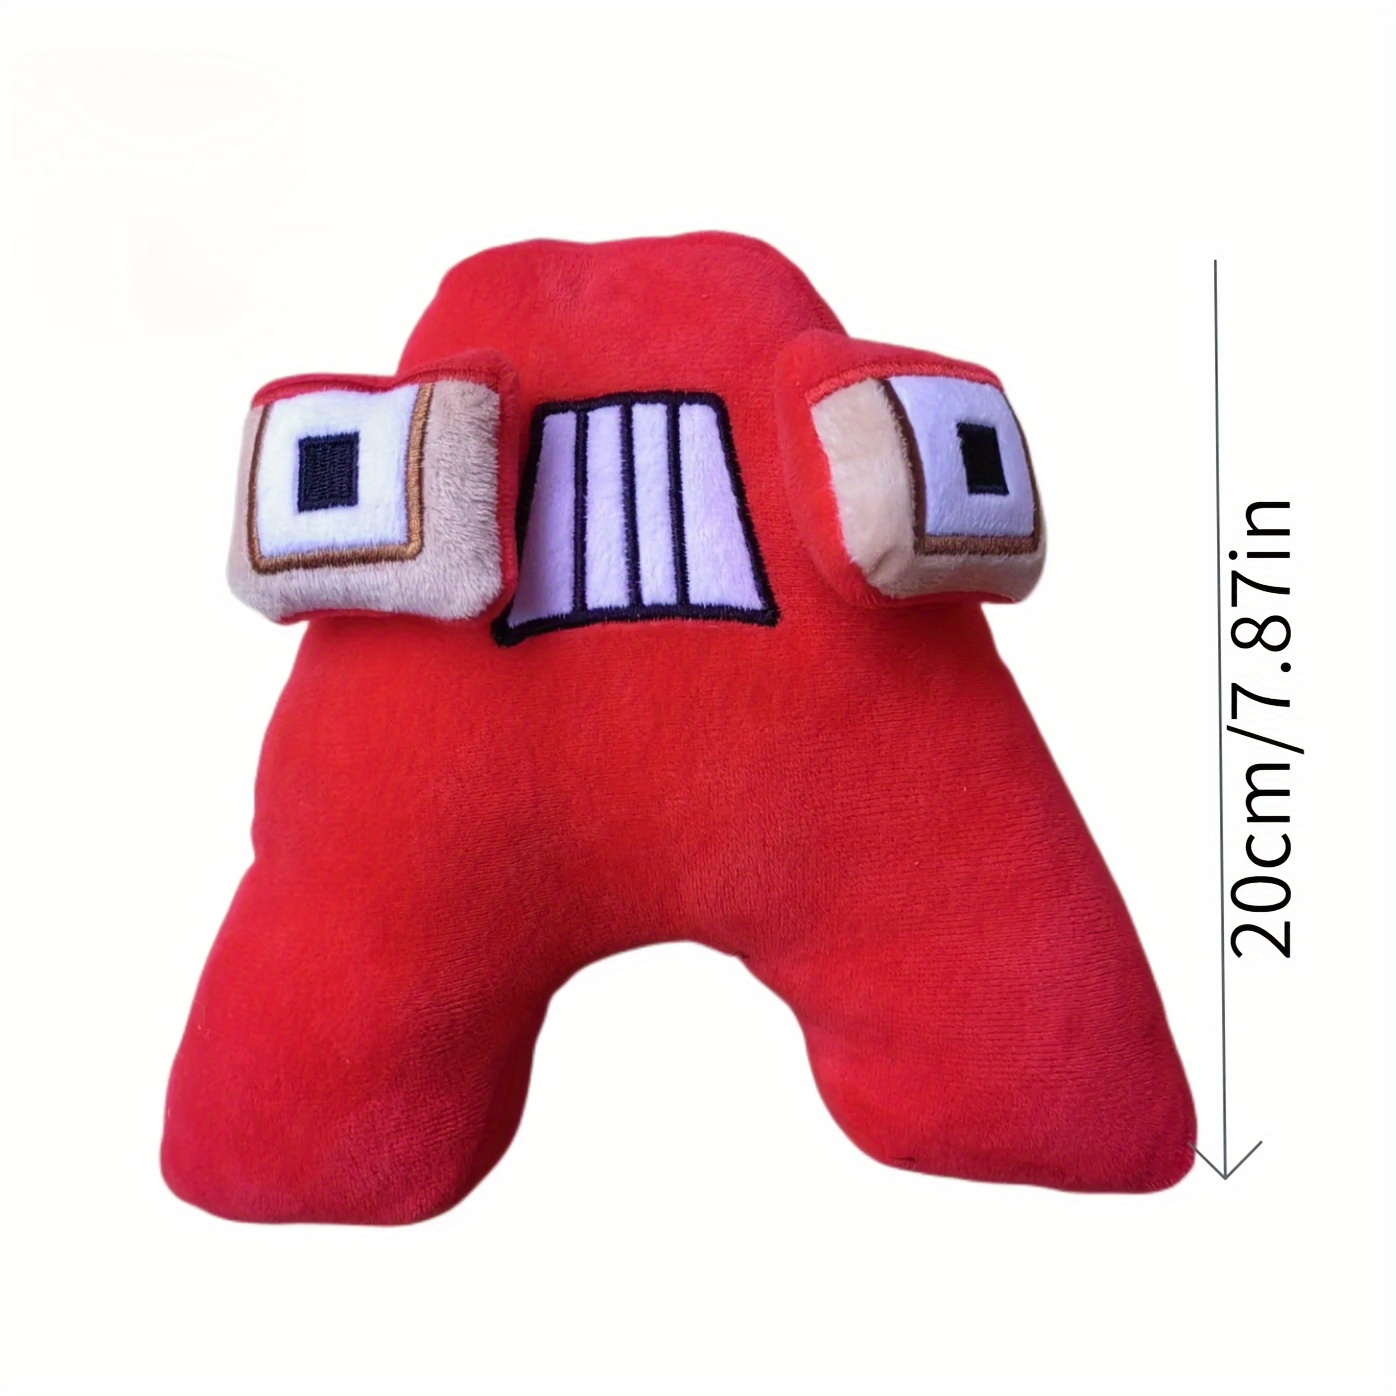 Alphabet Lore Plush Stuffed Toy- Stuffed Doll-Soft Education